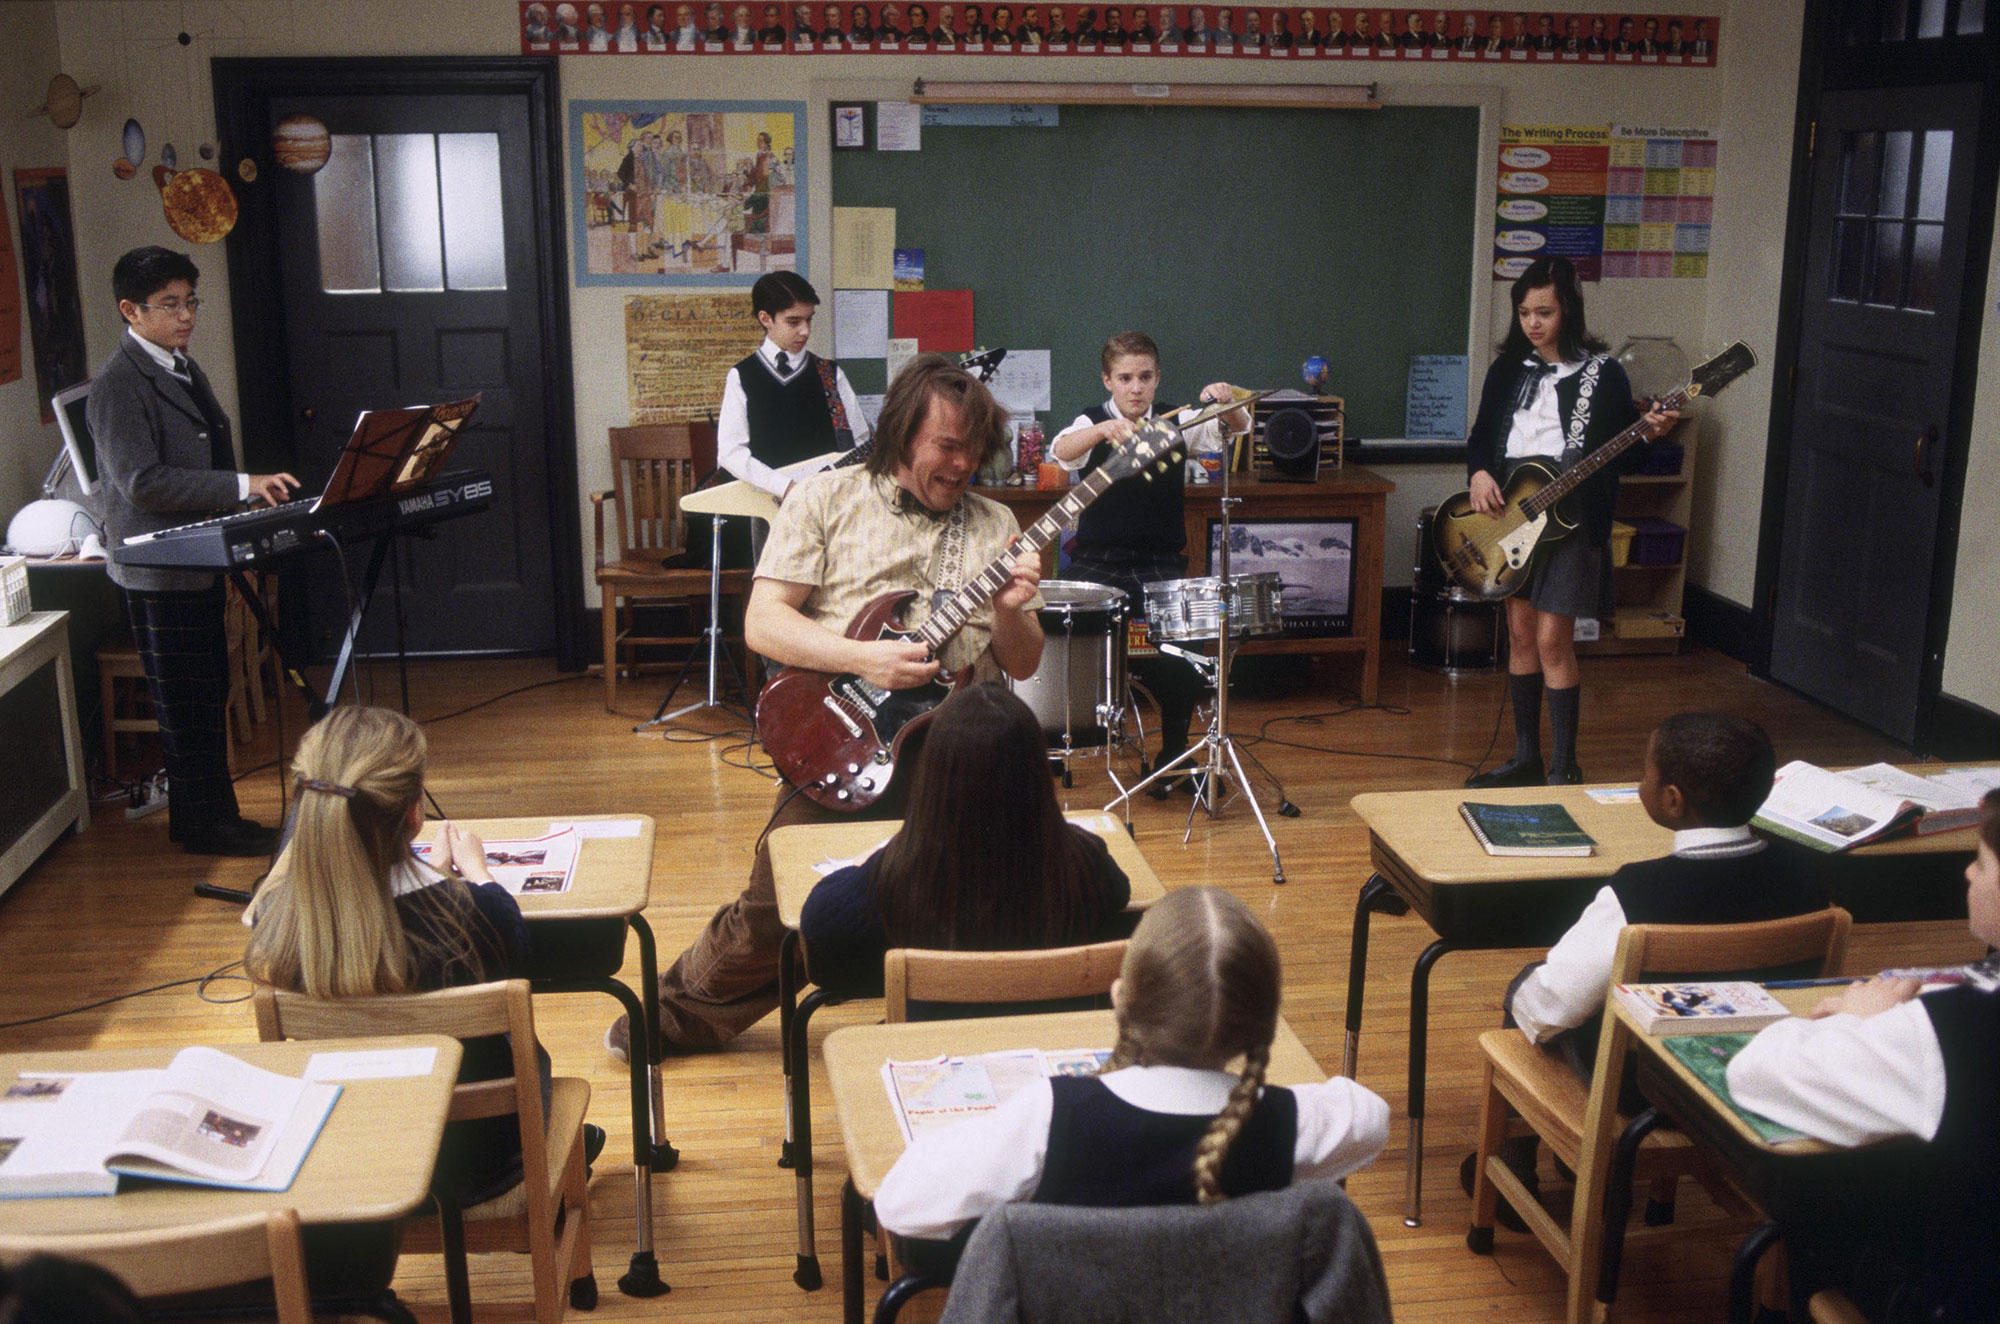 Jack Black Sends Video to Kids Doing 'School of Rock' Musical